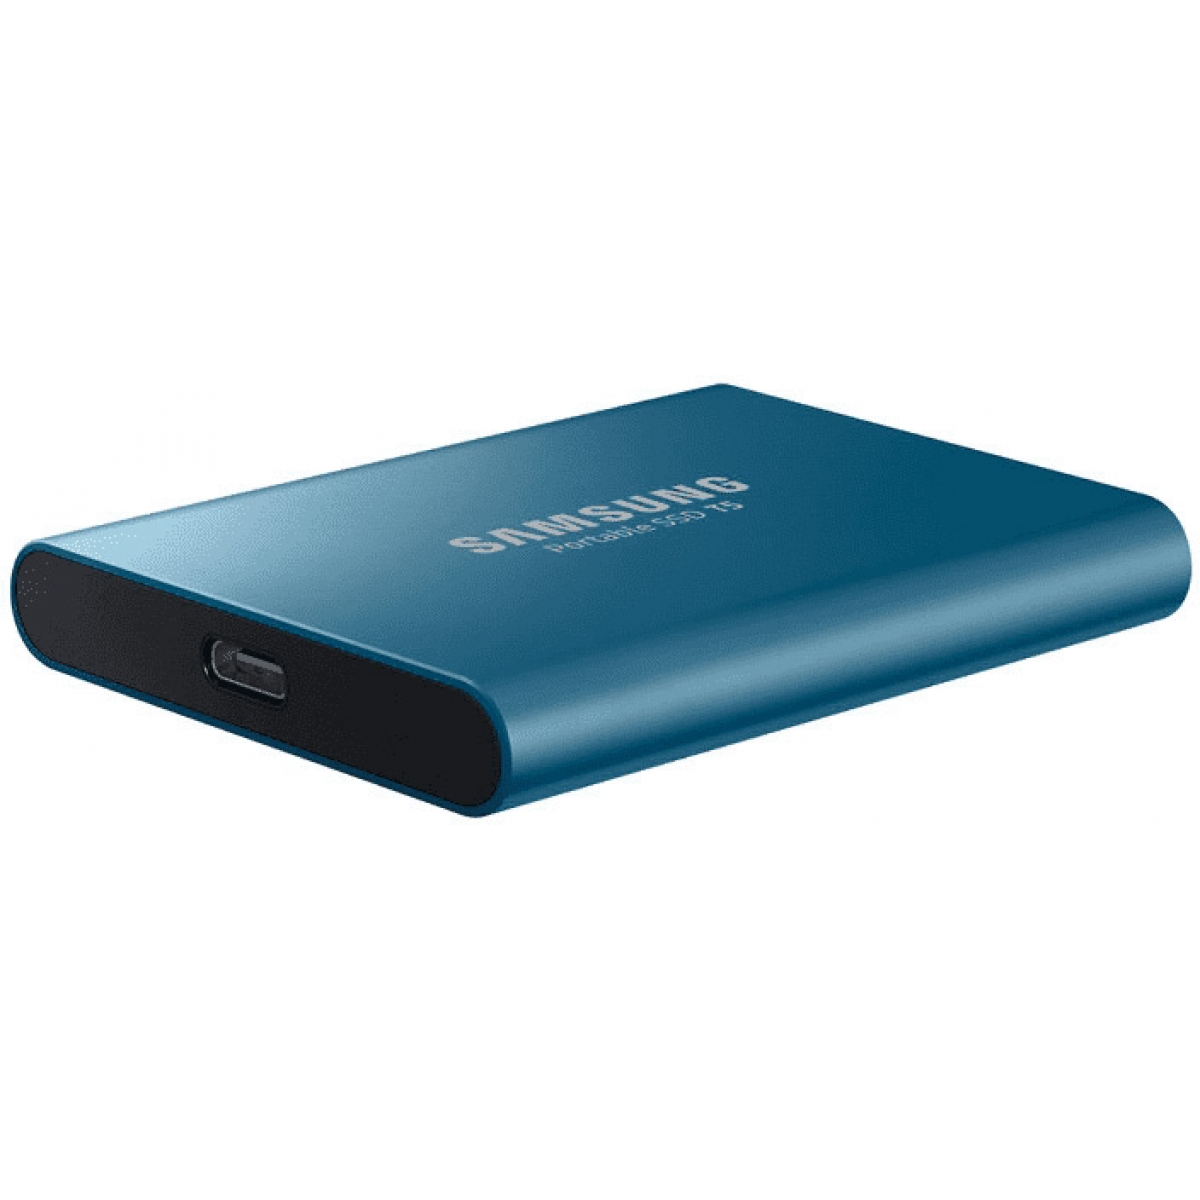 SSD Externo Samsung T5, 500GB, USB 3.1, Gravação 540MBs, MU-PA500B/AM